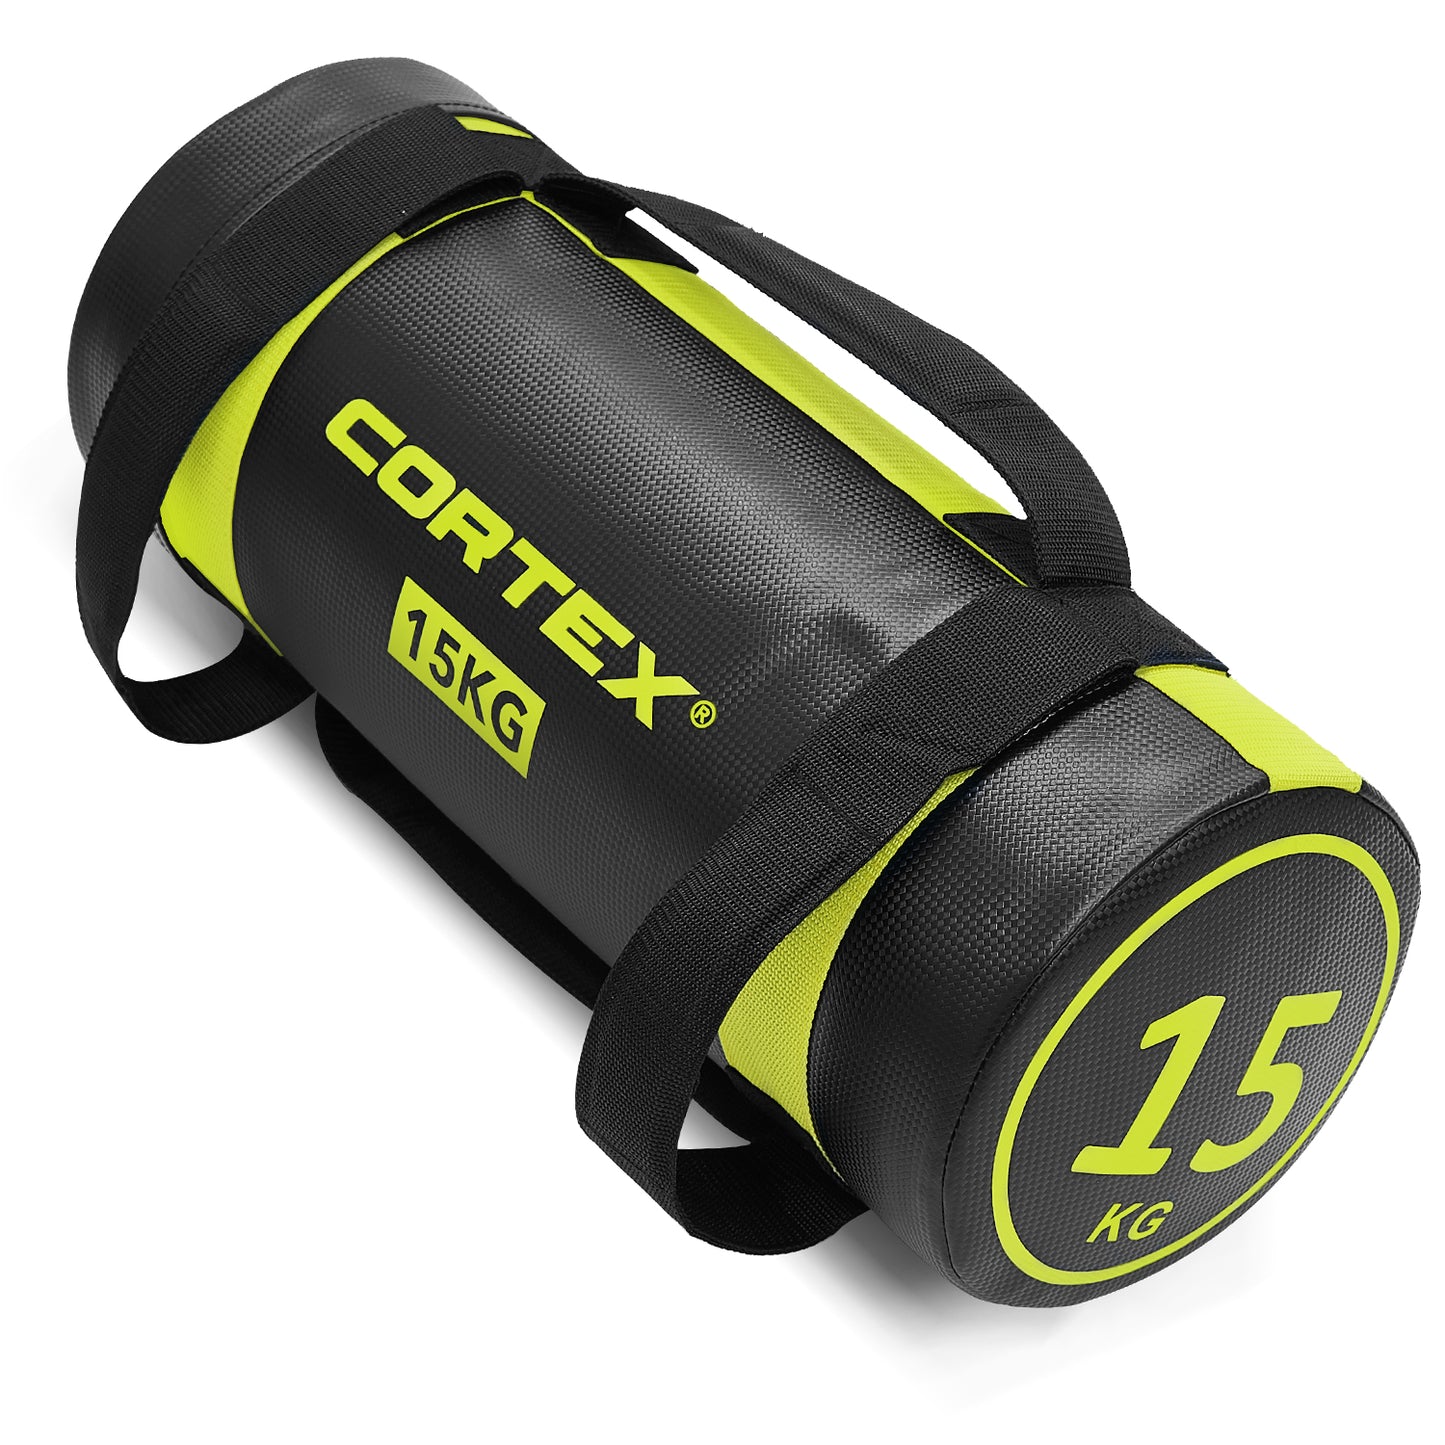 CORTEX 75kg Power Bag Complete Set